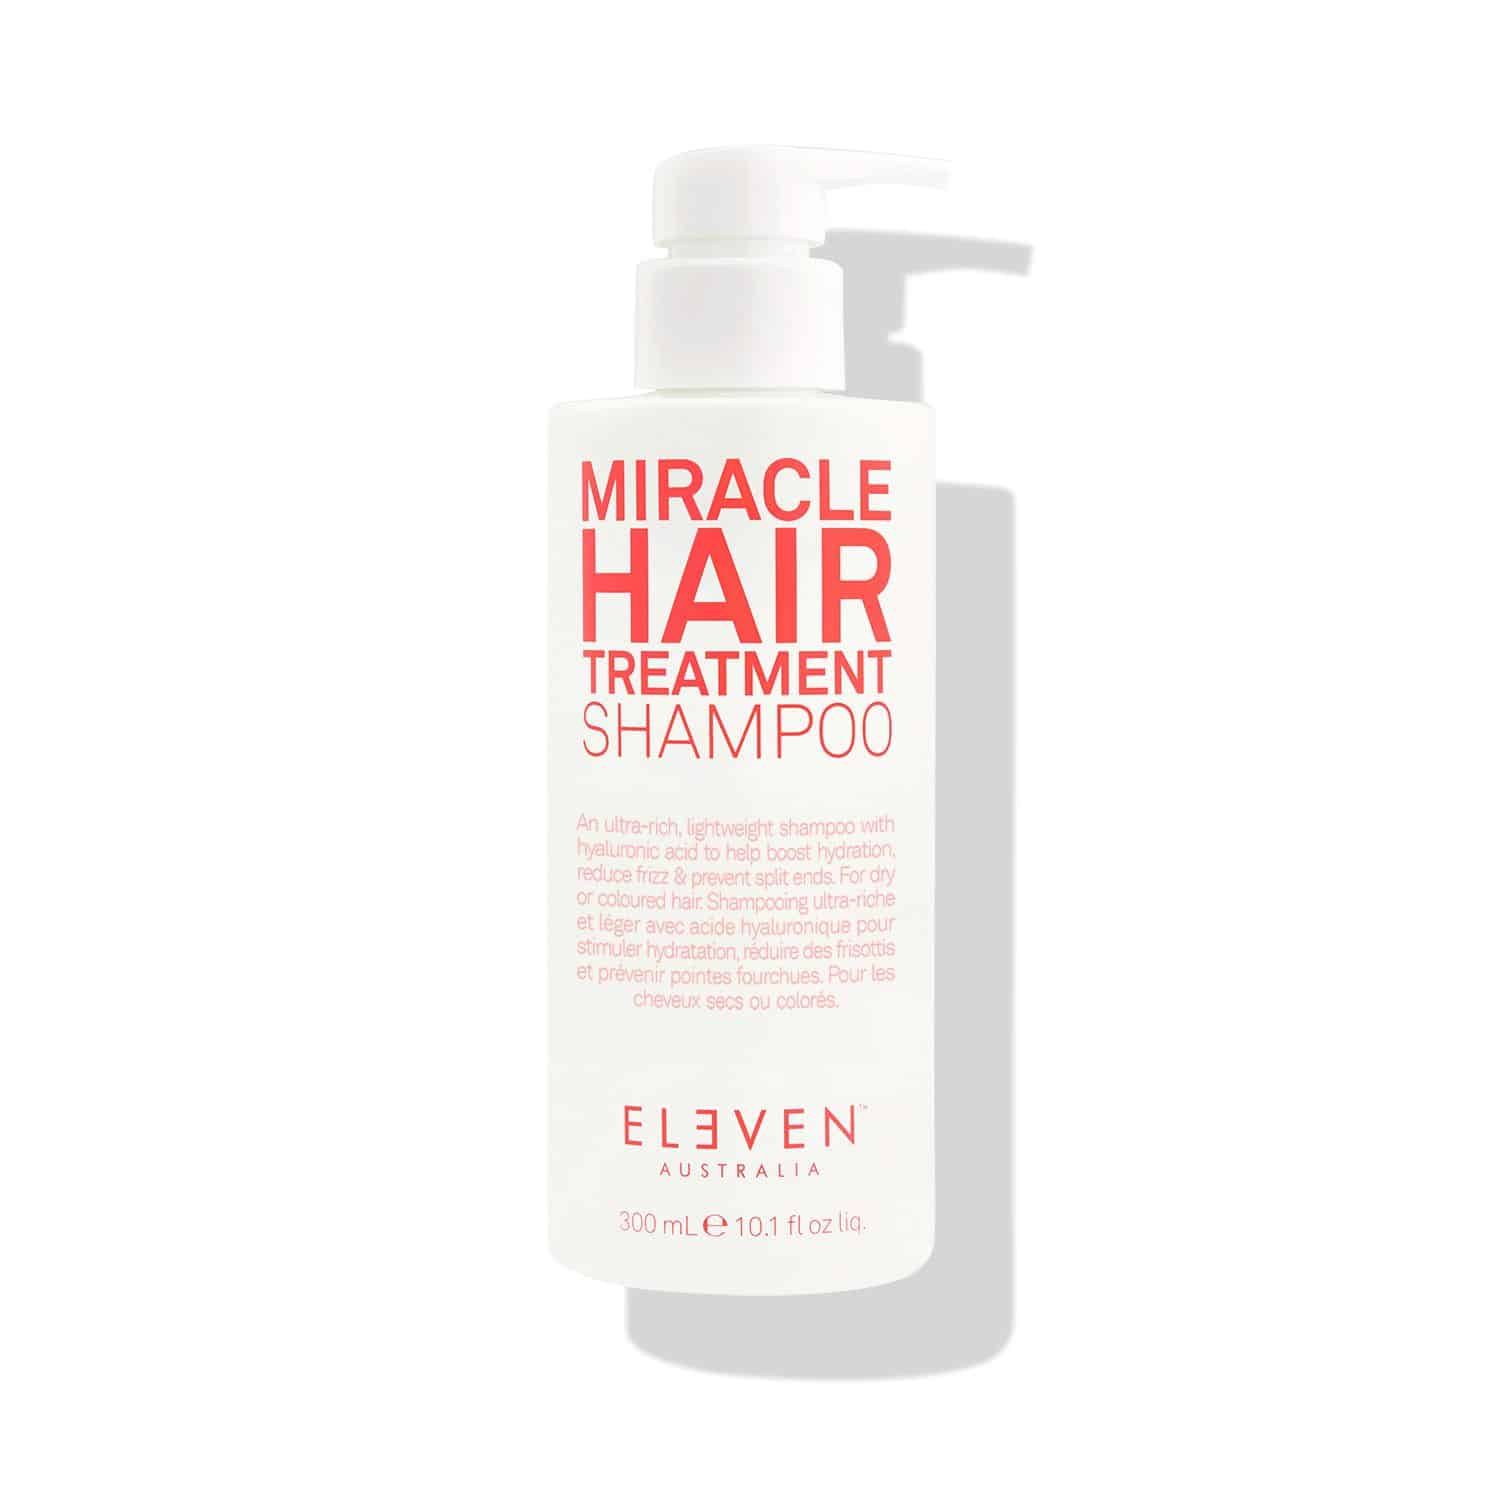 Omslagsbild för “Eleven Miracle Hair treatment shampoo”